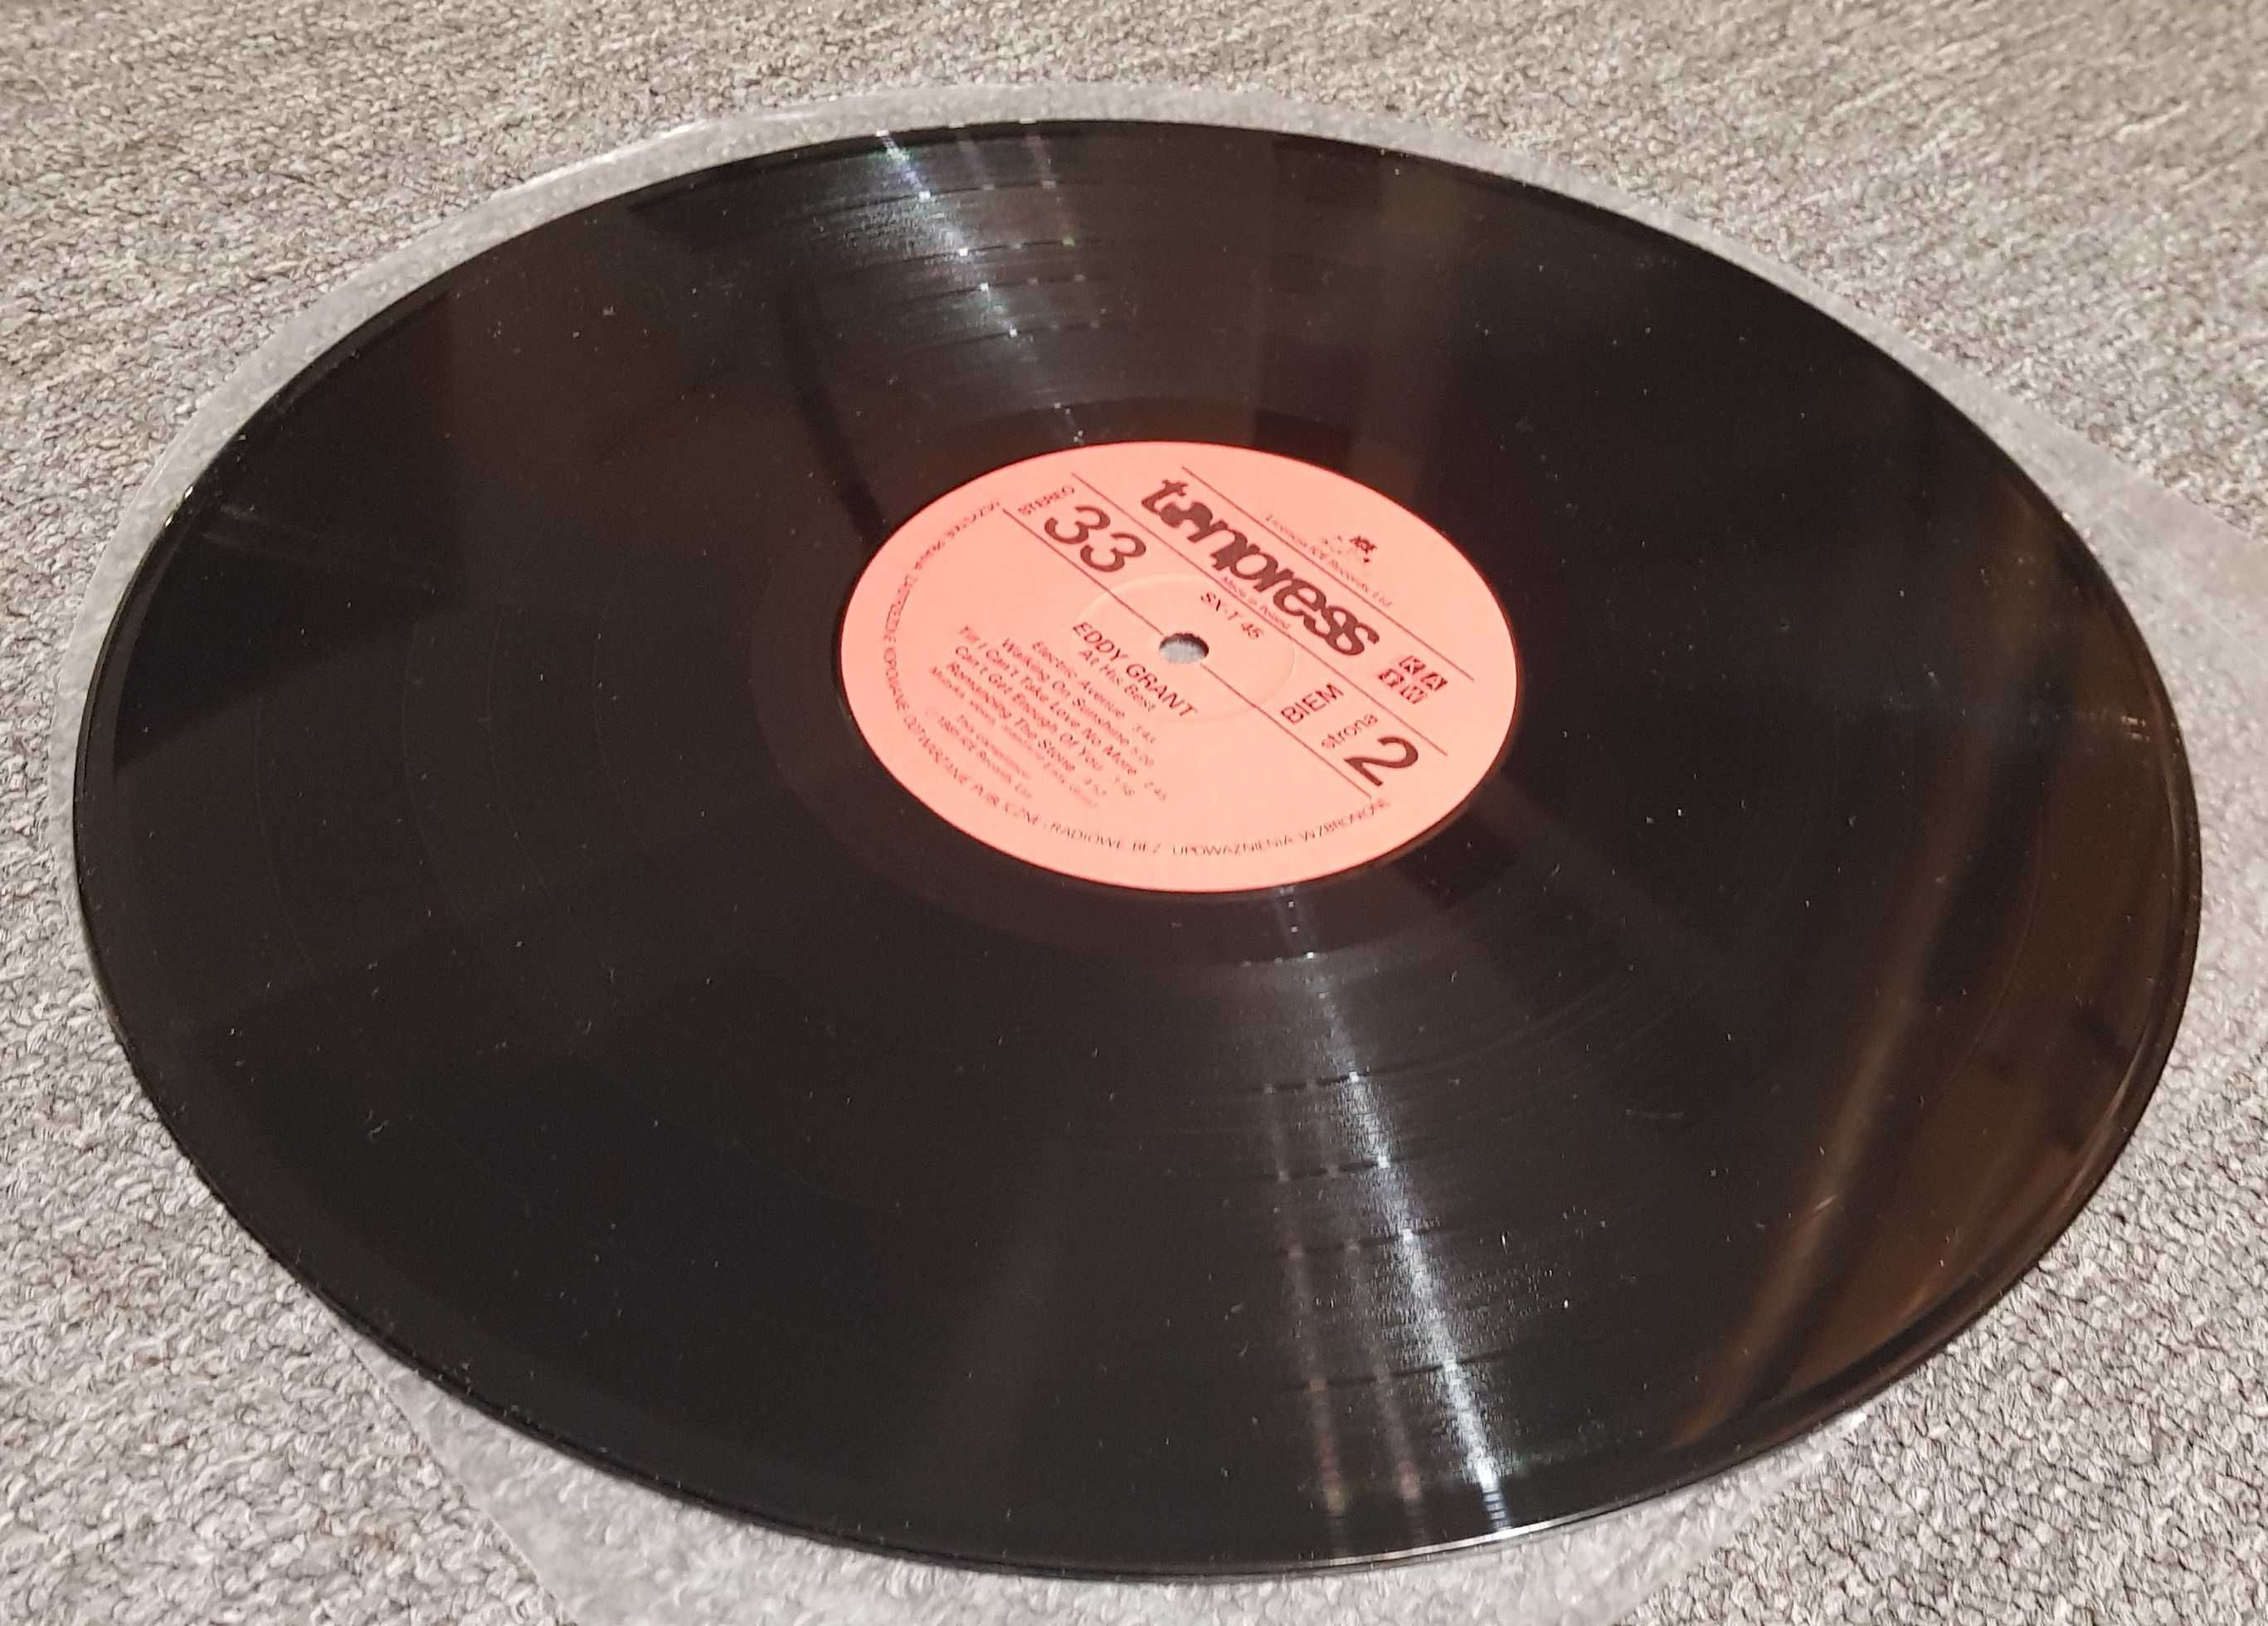 Płyta winylowa, Eddy Grant, At his best